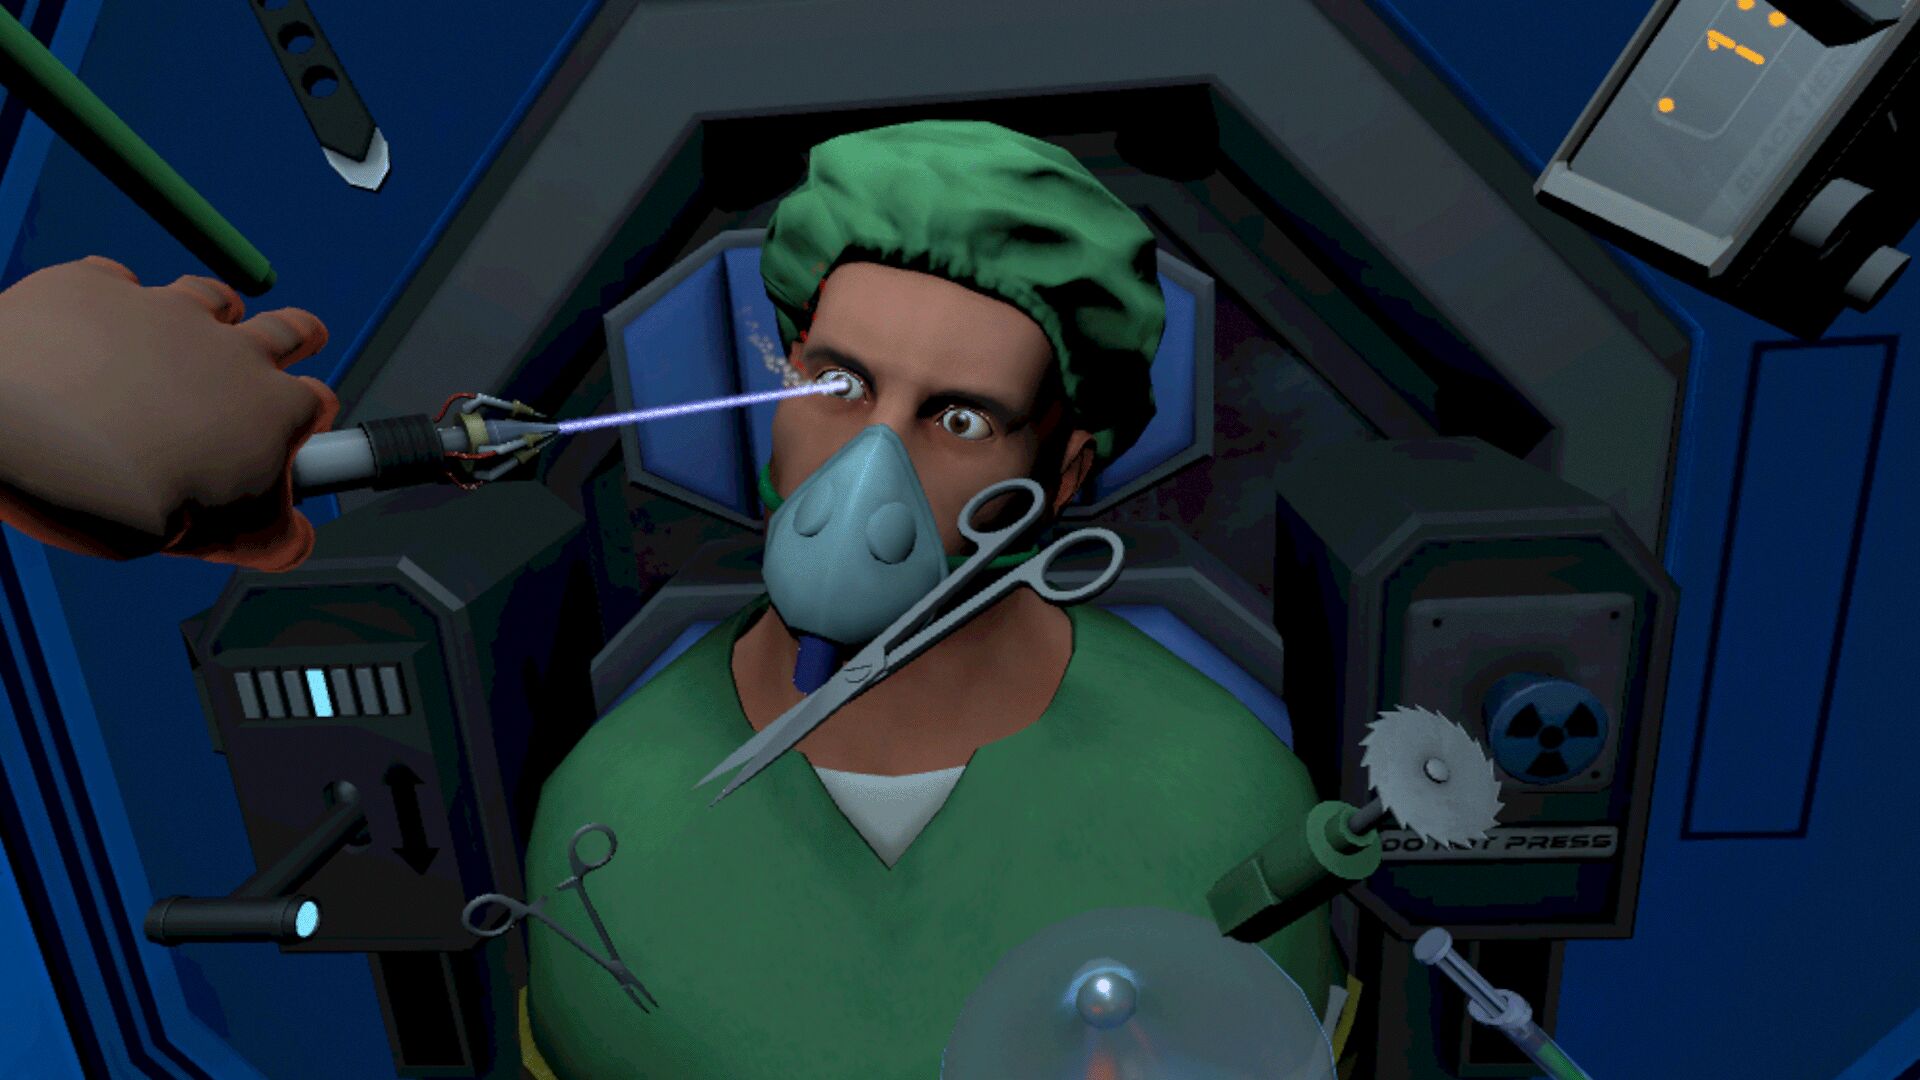 surgeon simulator ps4 gamespot